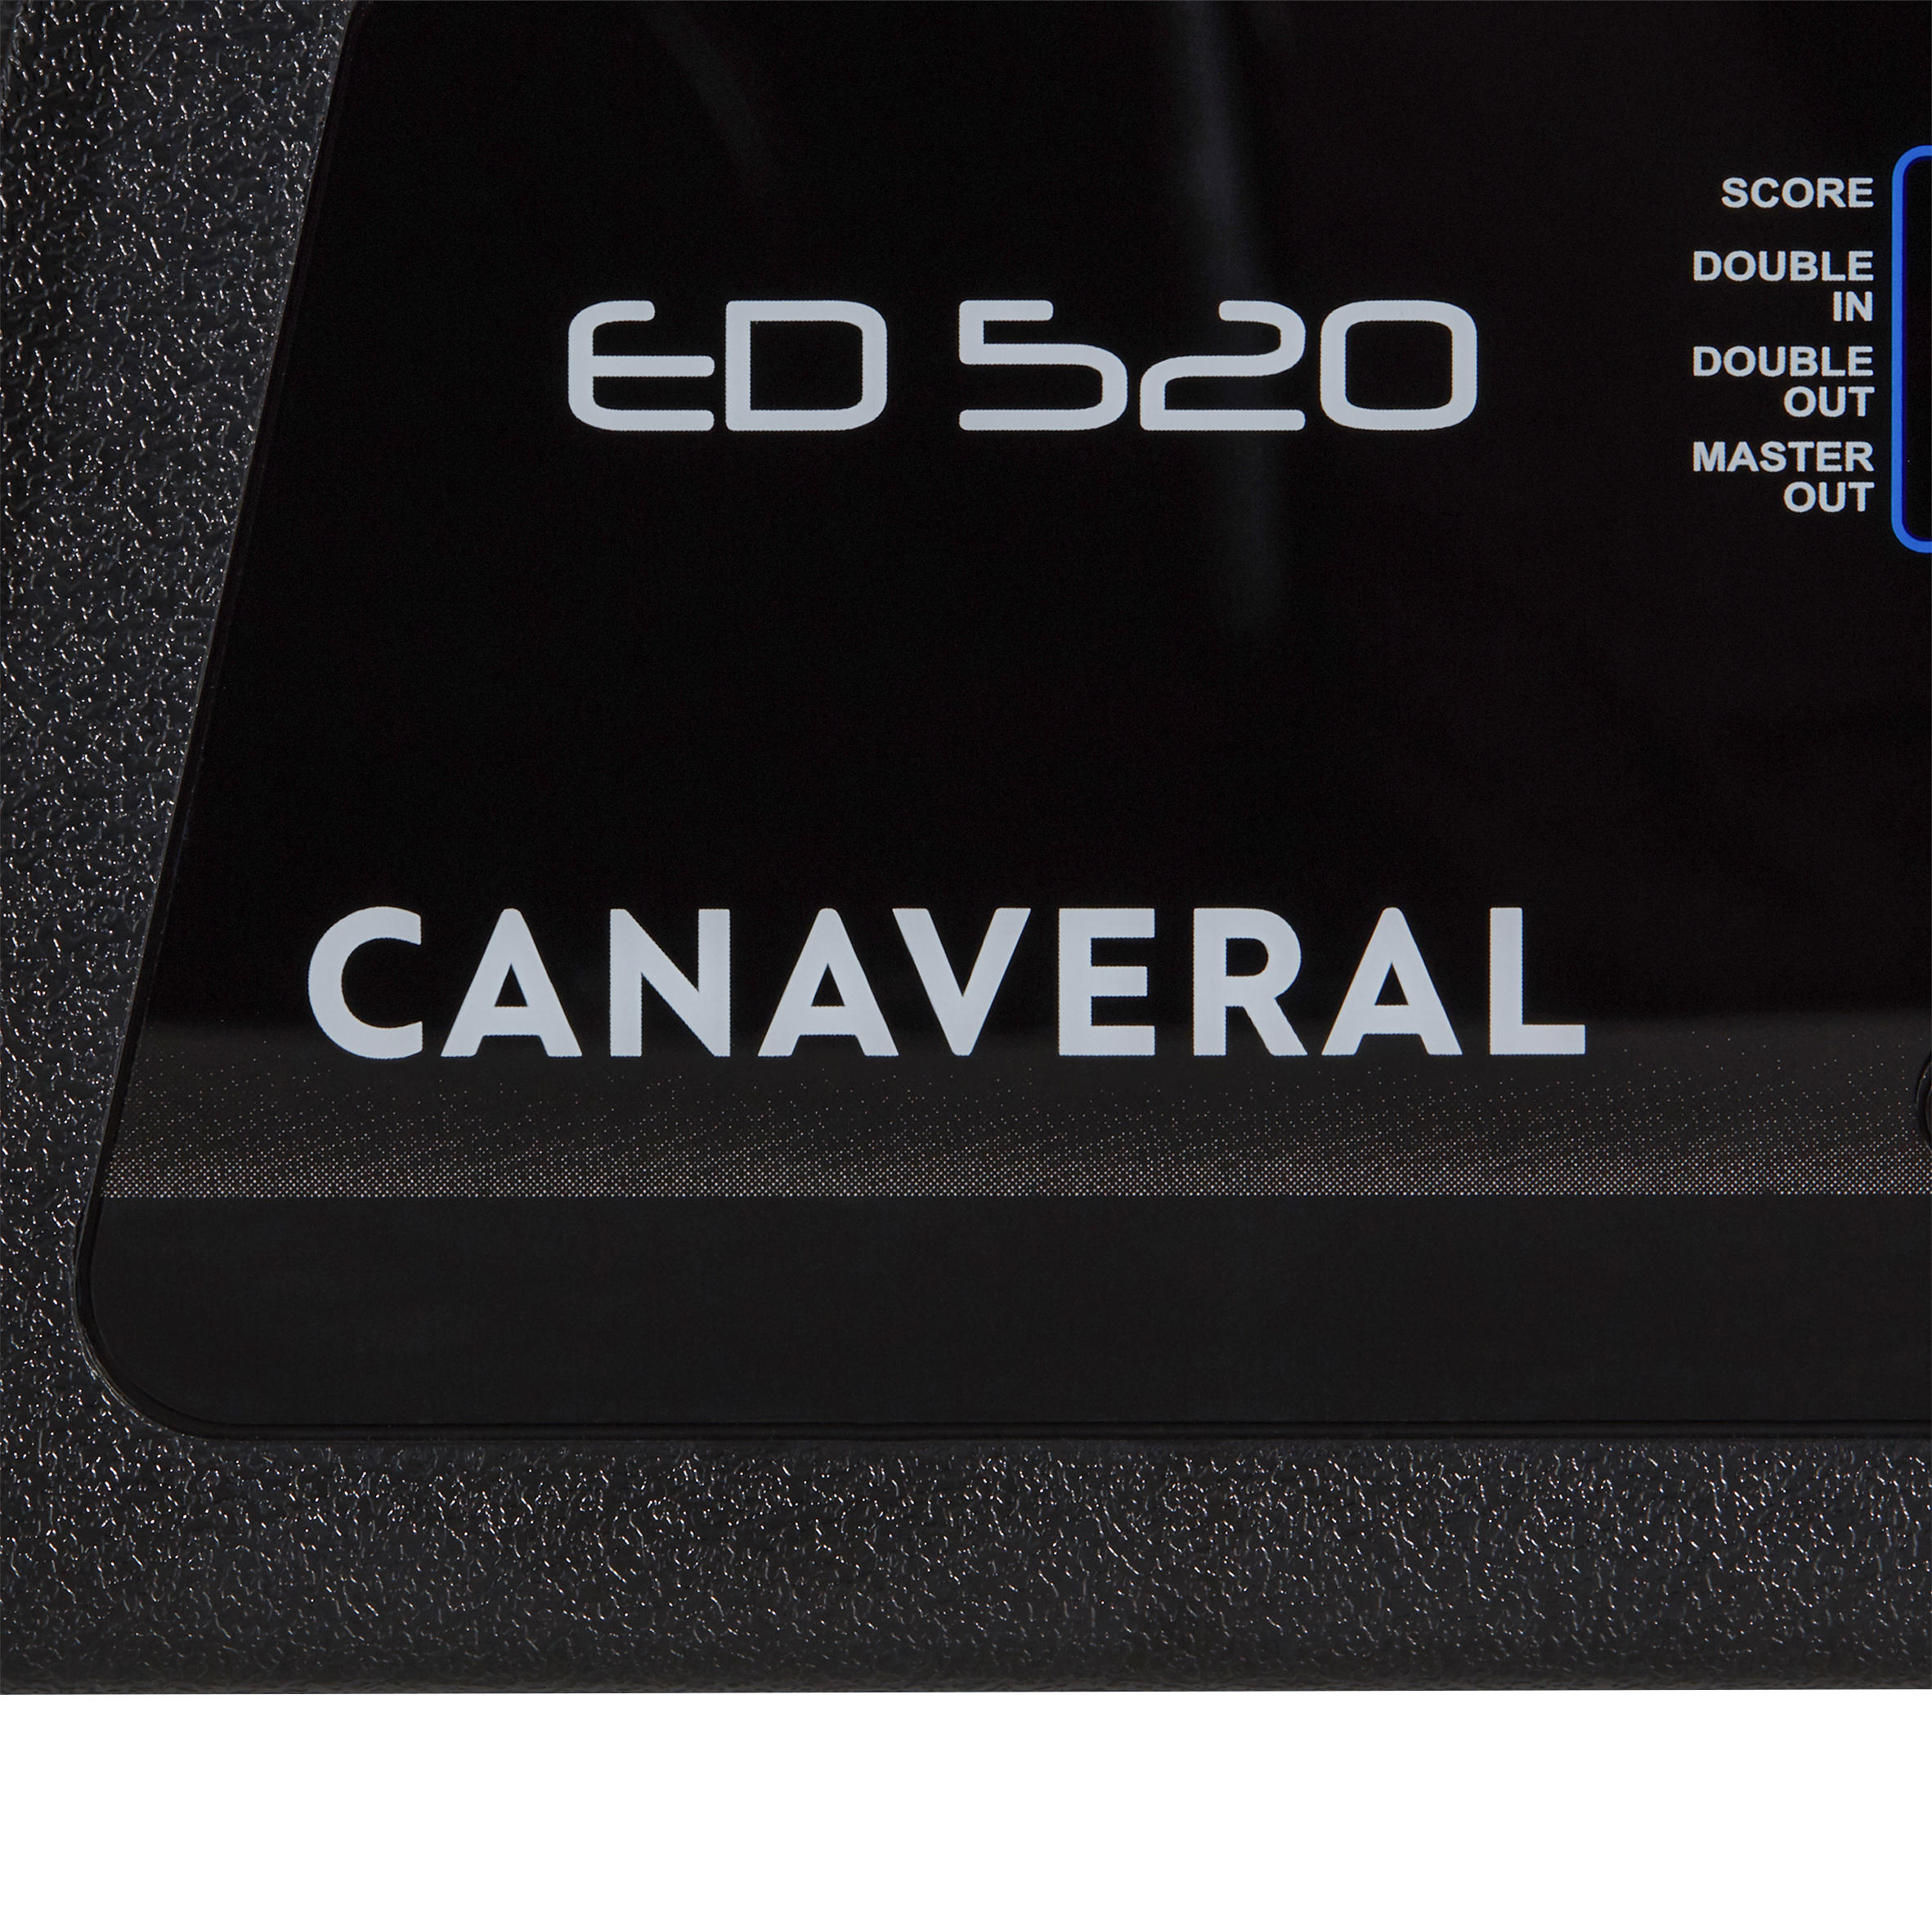 ED520 Electronic Dartboard 8/17